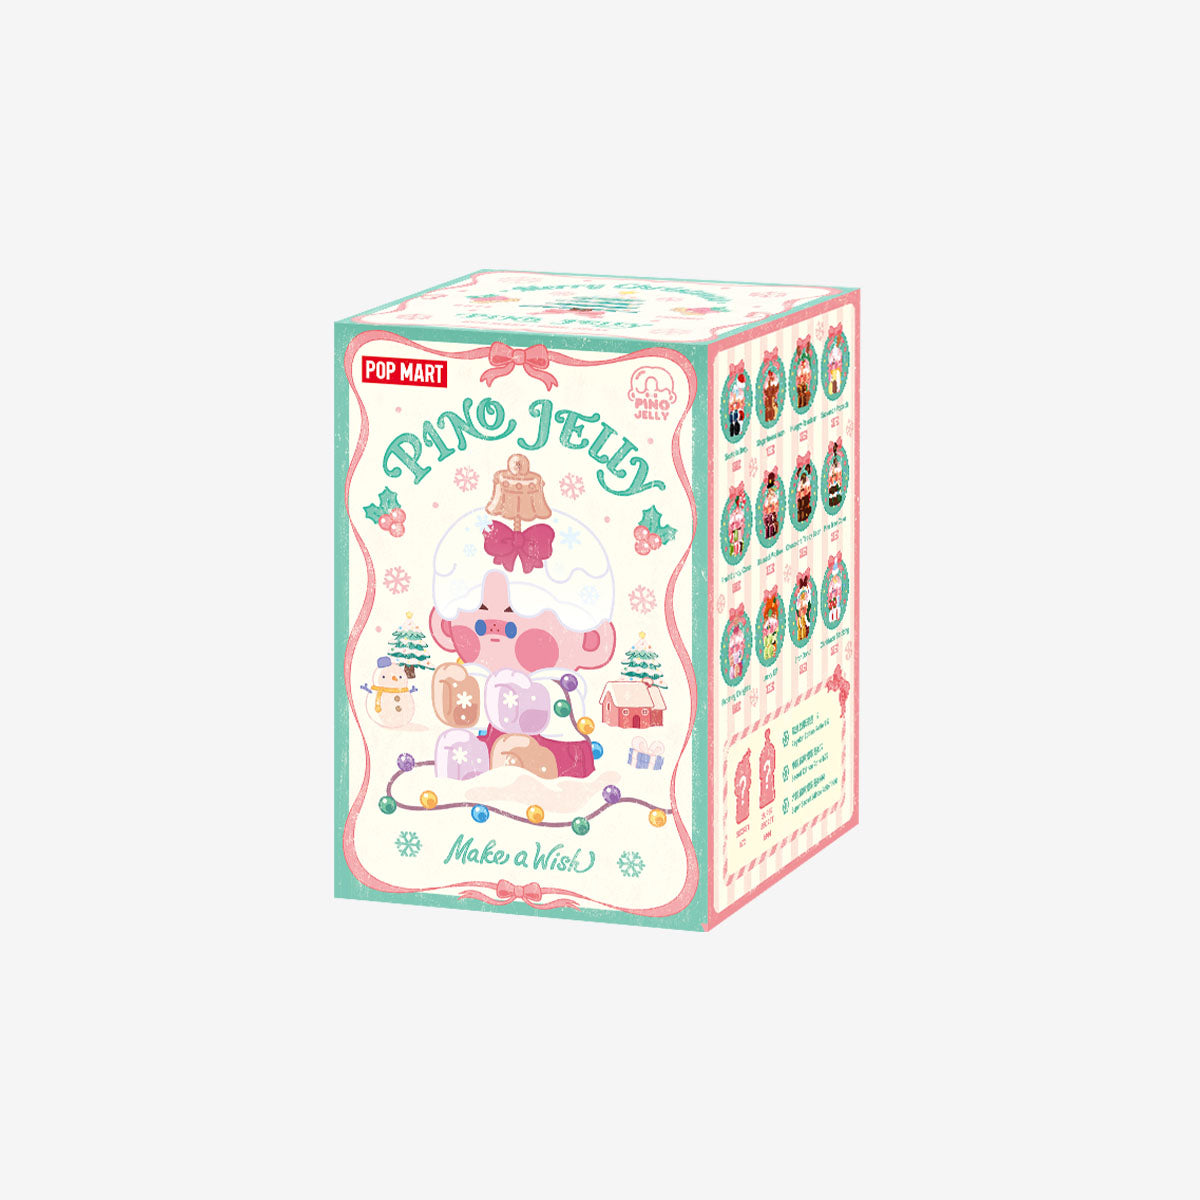 【XMAS】Pop Mart: Pino Jelly Make a Wish Series Blind Box